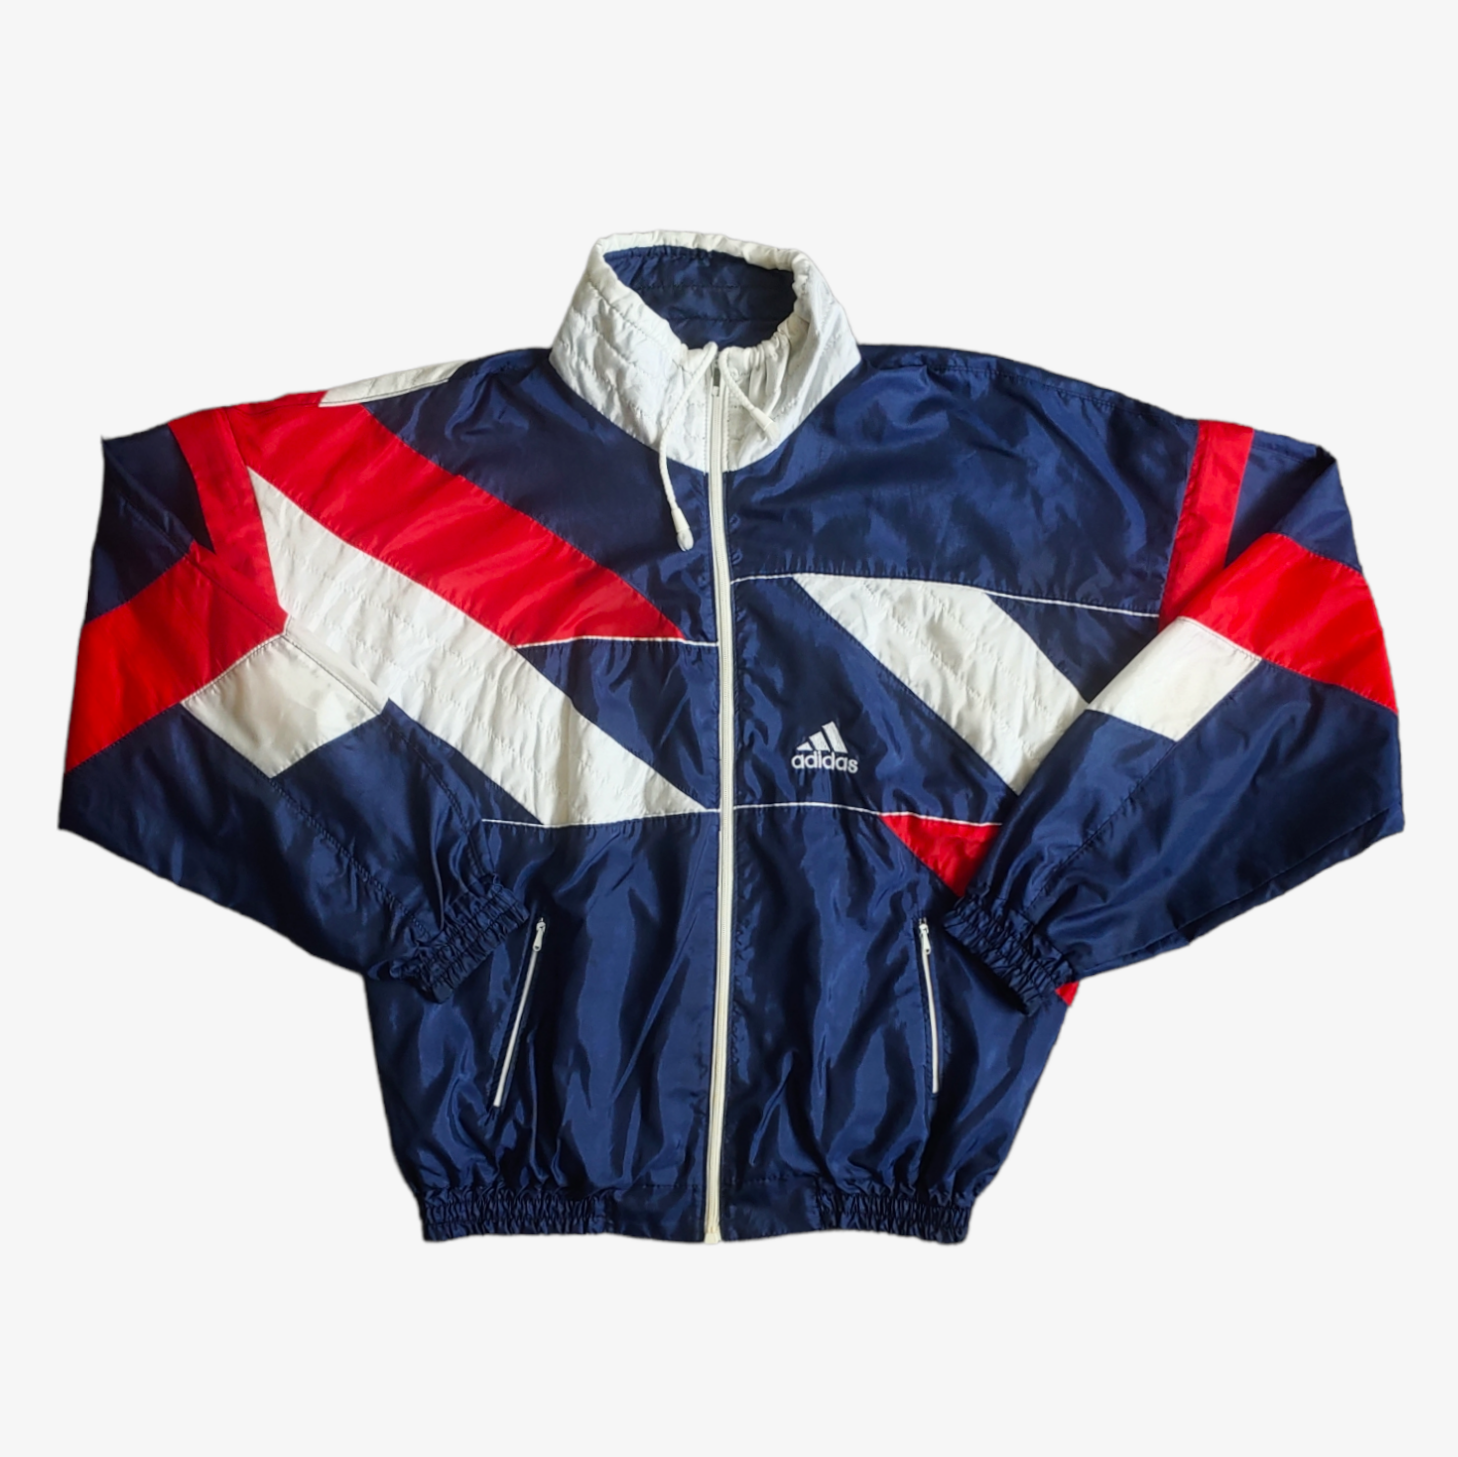 Vintage 90s Adidas England Colour Way Track Jacket - Casspios Dream